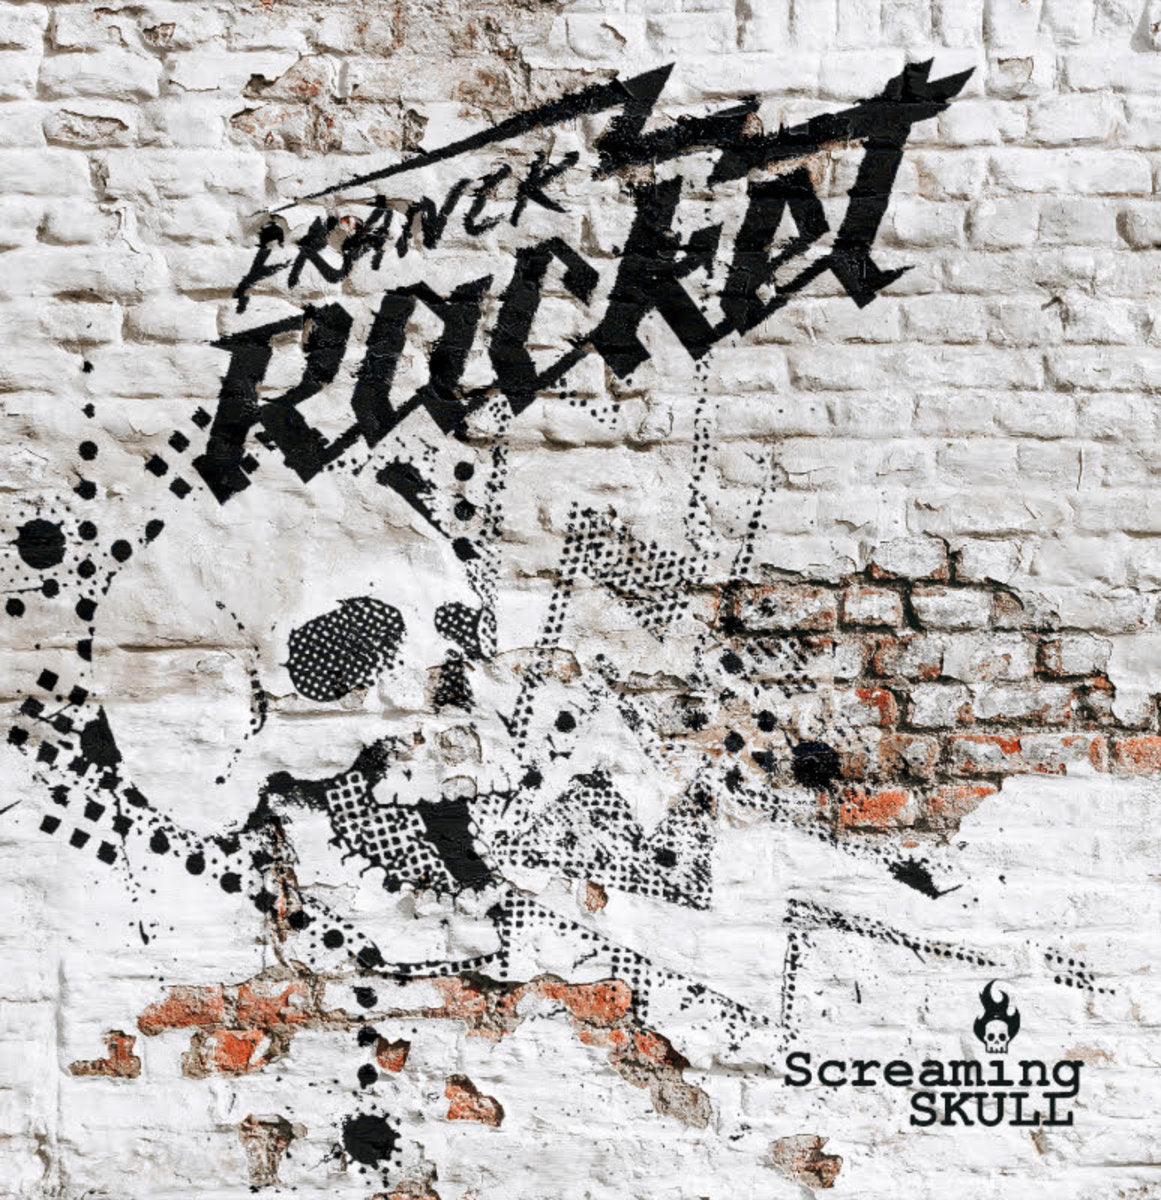 FRANCK RACKET - "SCREAMING SKULL" Compact Disc